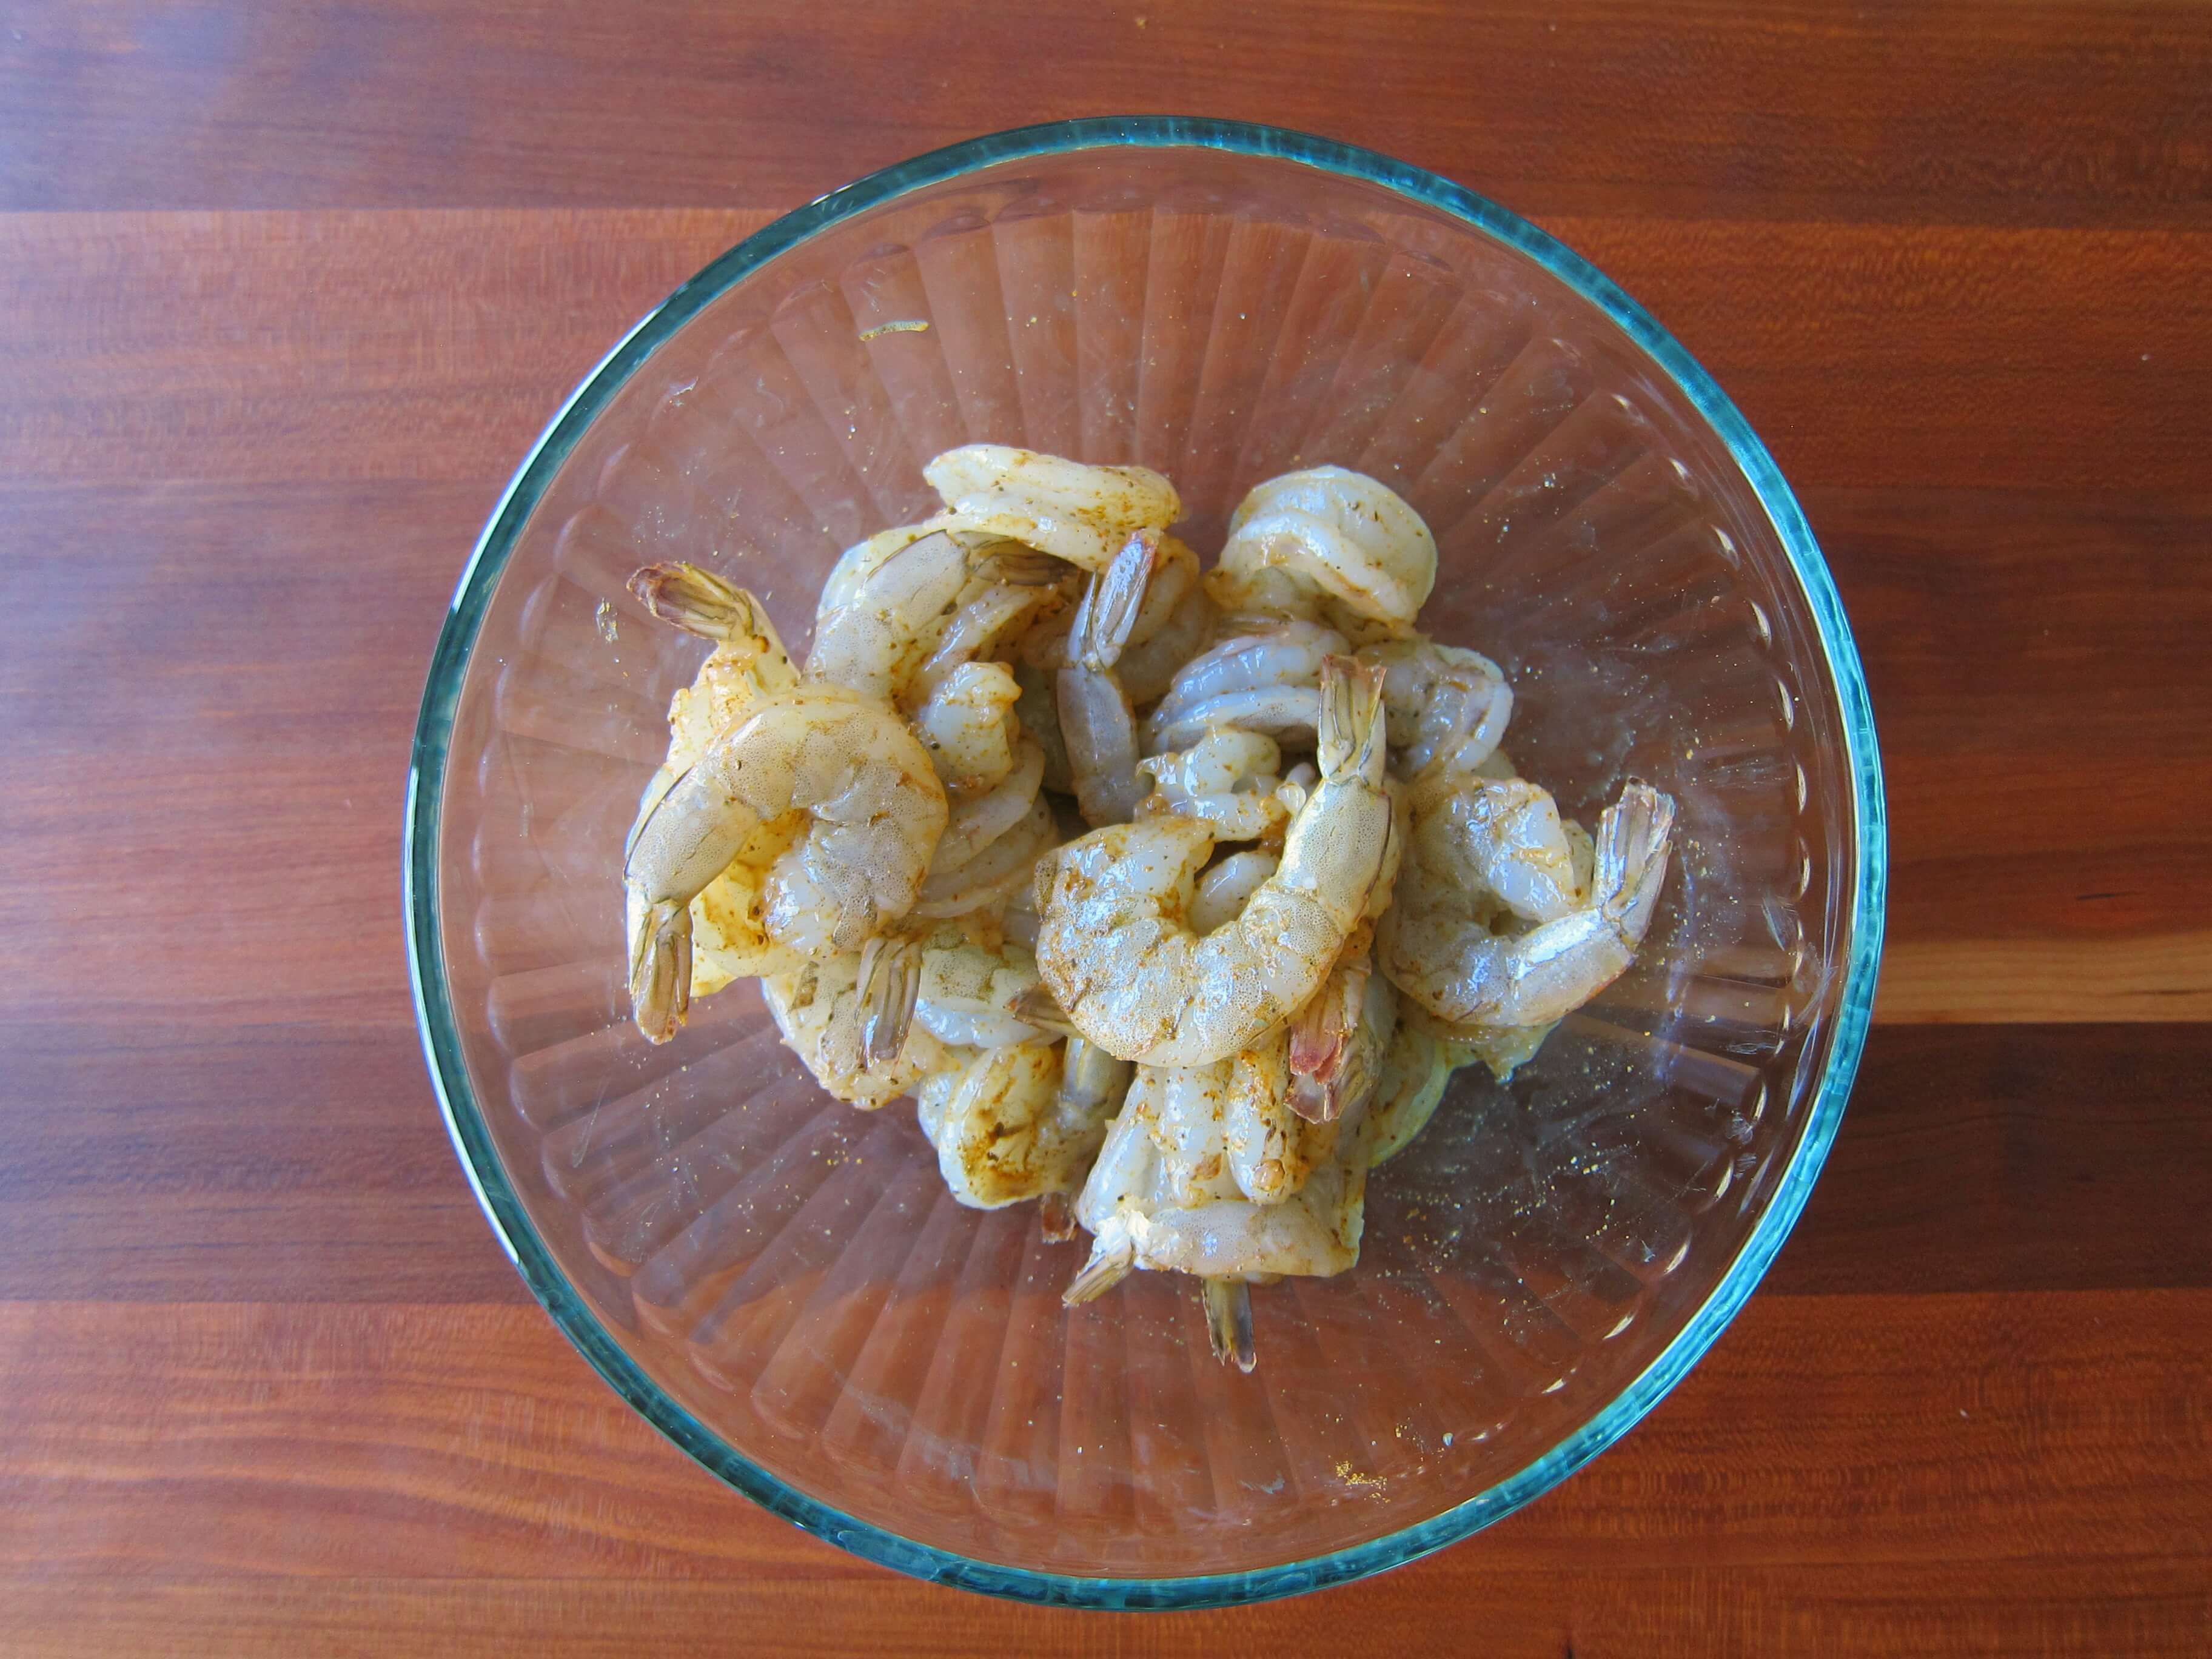 Glass bowl with marinated shrimp